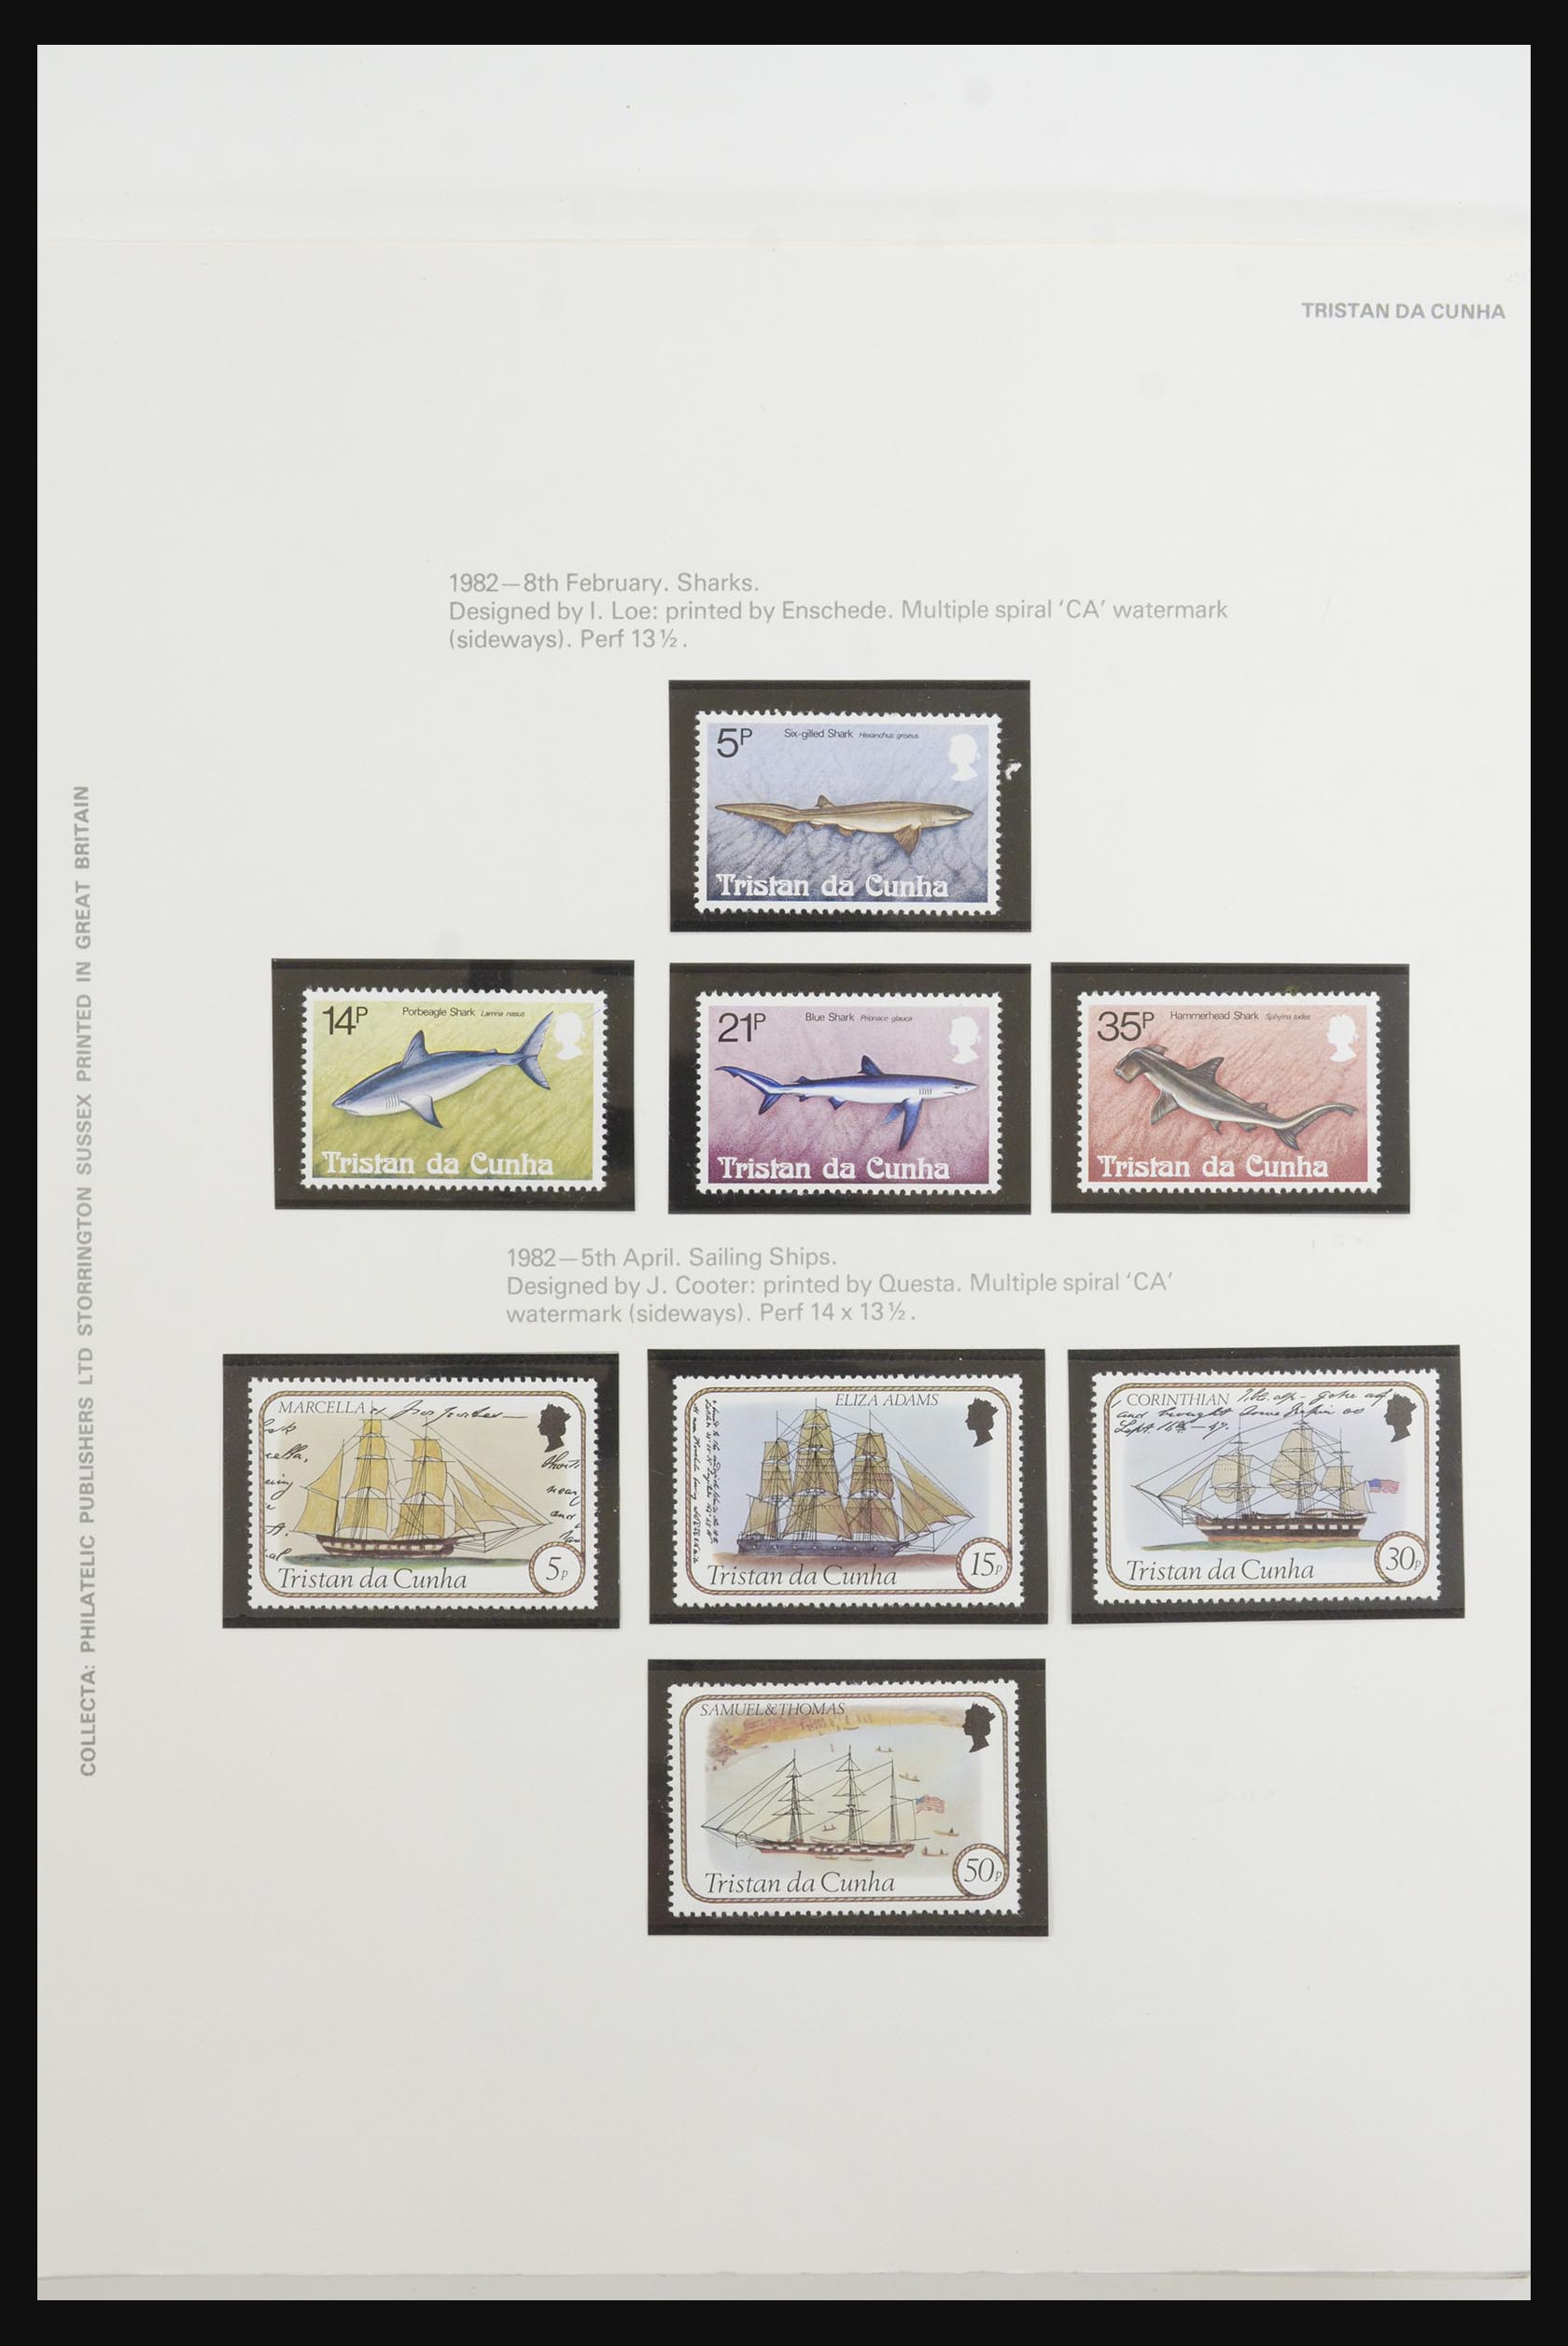 31659 110 - 31659 Motief: Antarctica en Arctica 1880-1998.